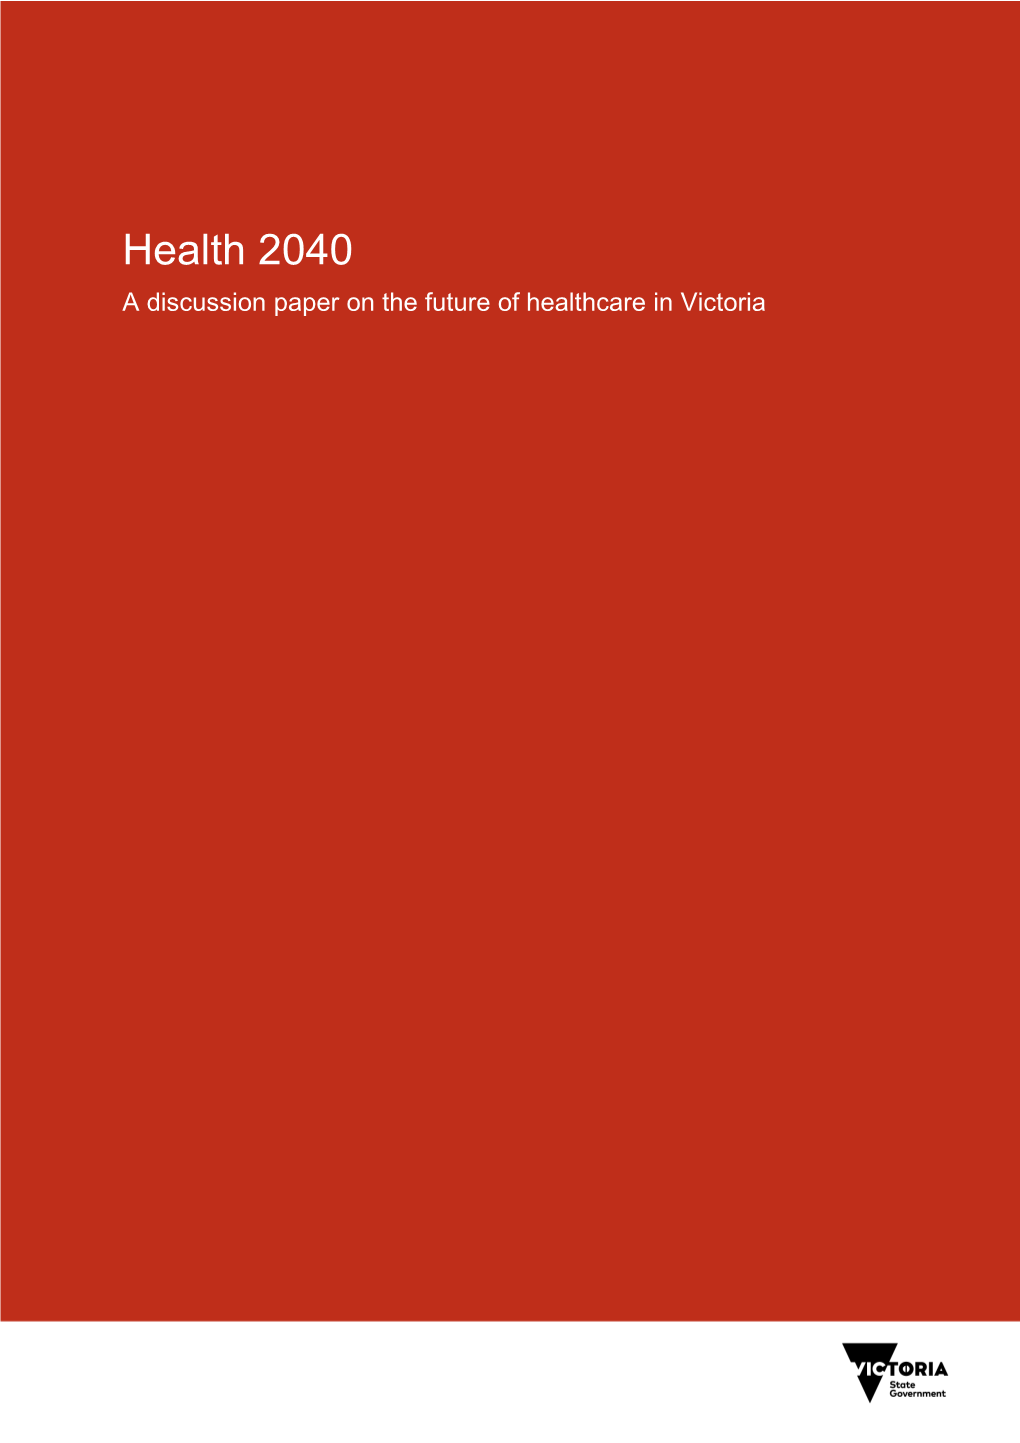 Health 2040: a Discussion Paper on the Future of Healthcare in Victoria